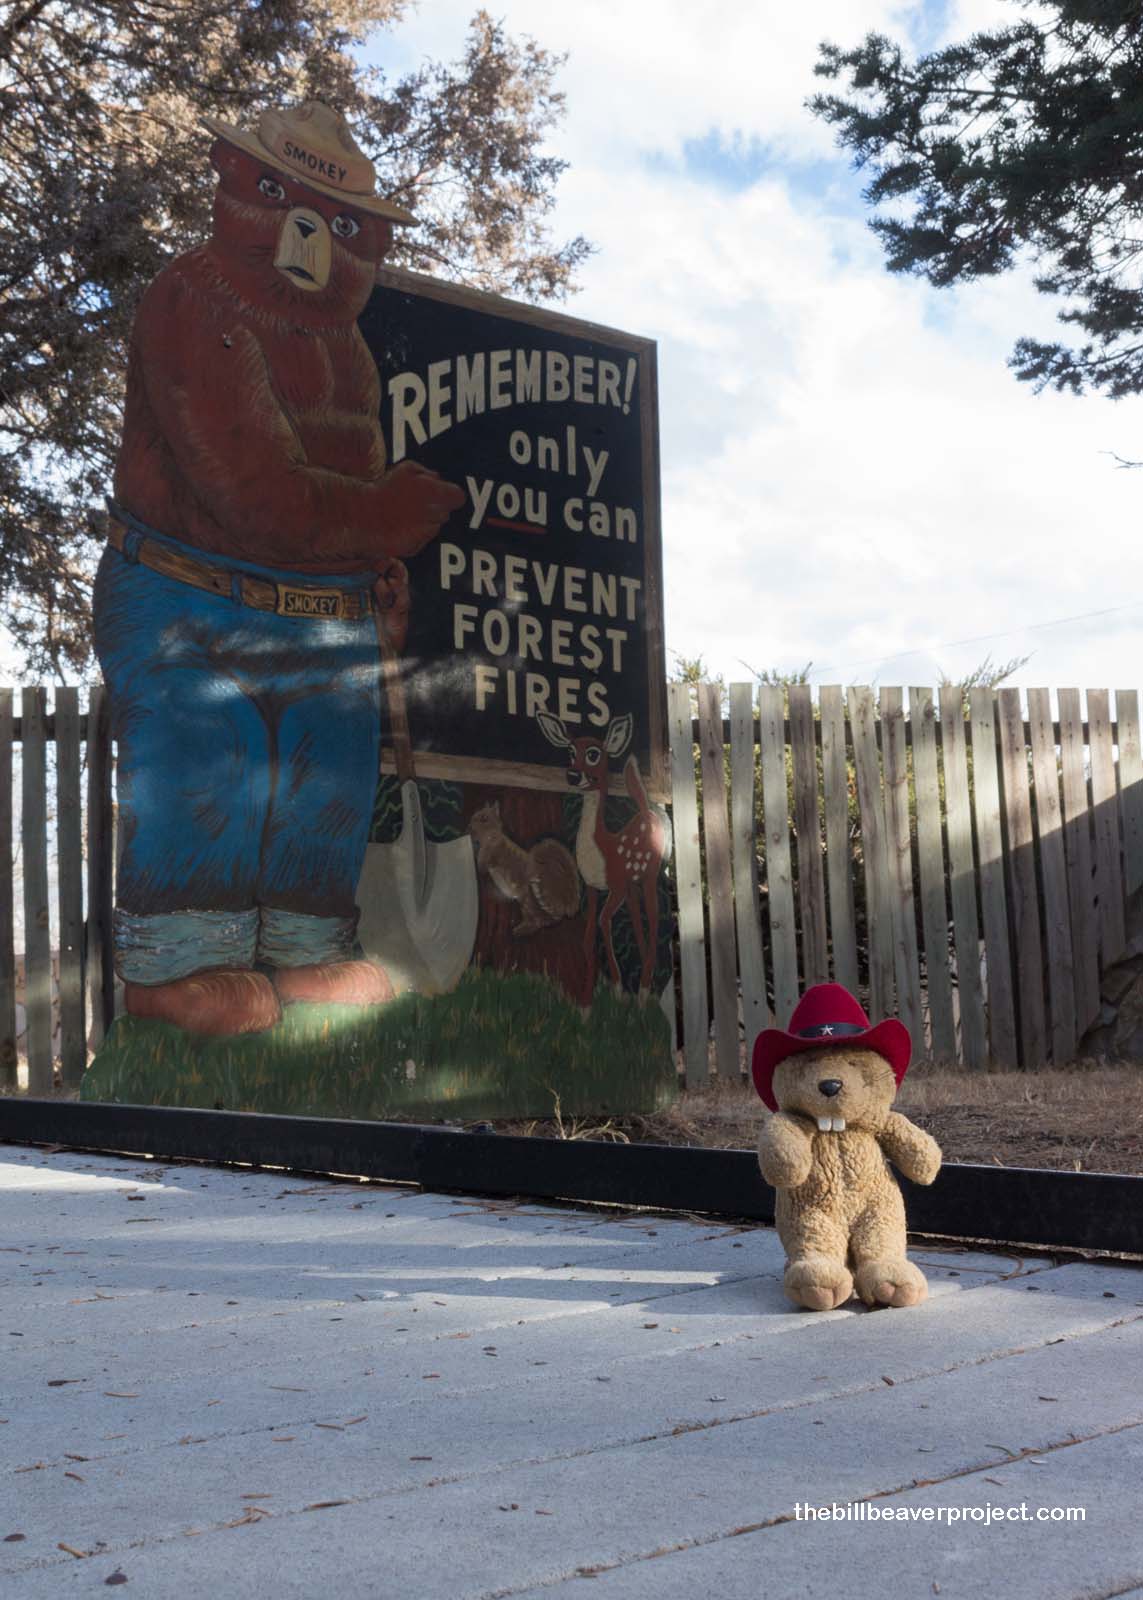 Smokey Bear Historical Park